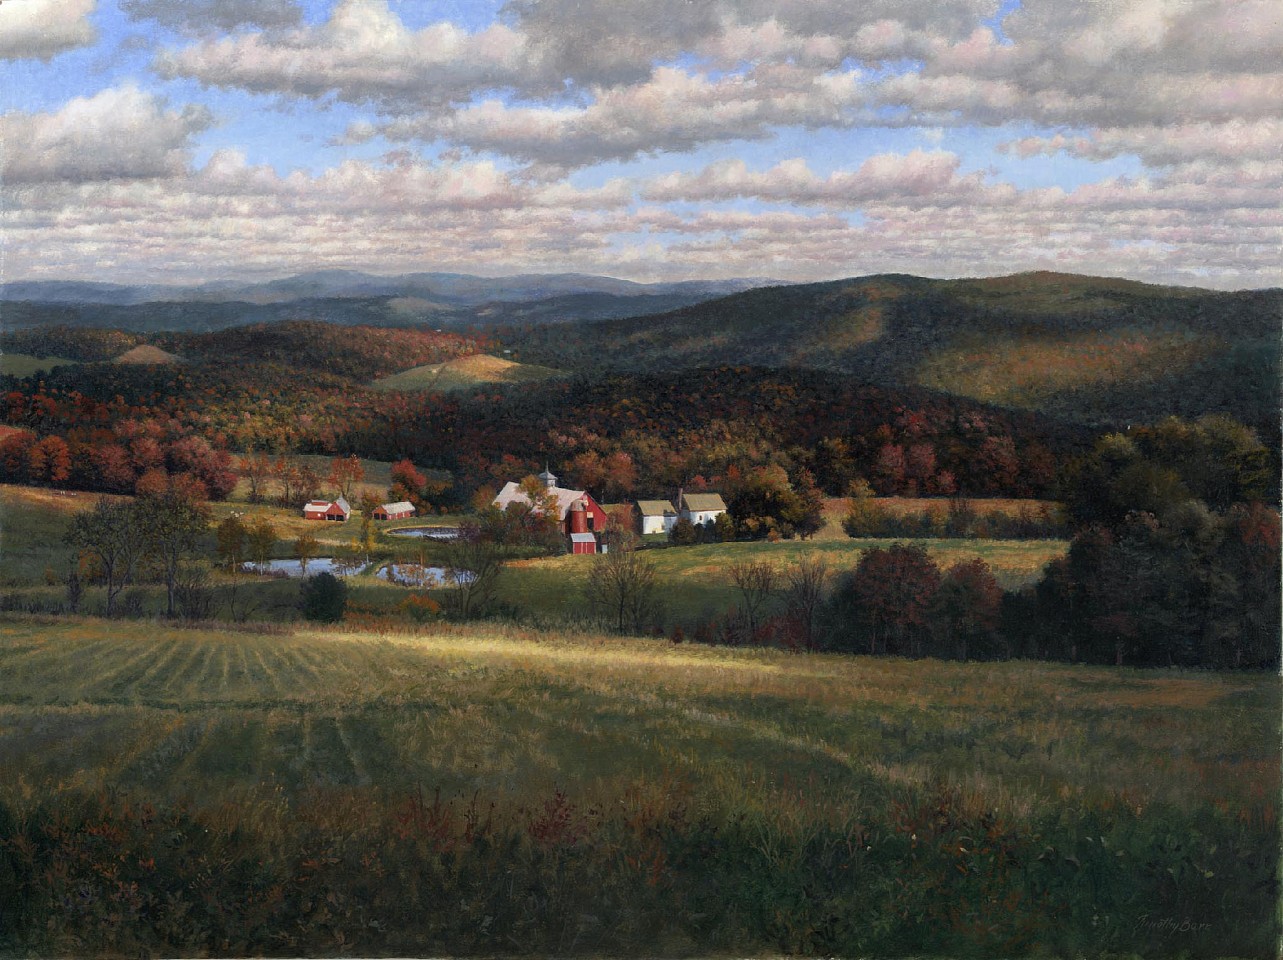 Timothy Barr, Peacham Landscape
oil on panel, 18 x 24 in. (45.7 x 61 cm)
1804002